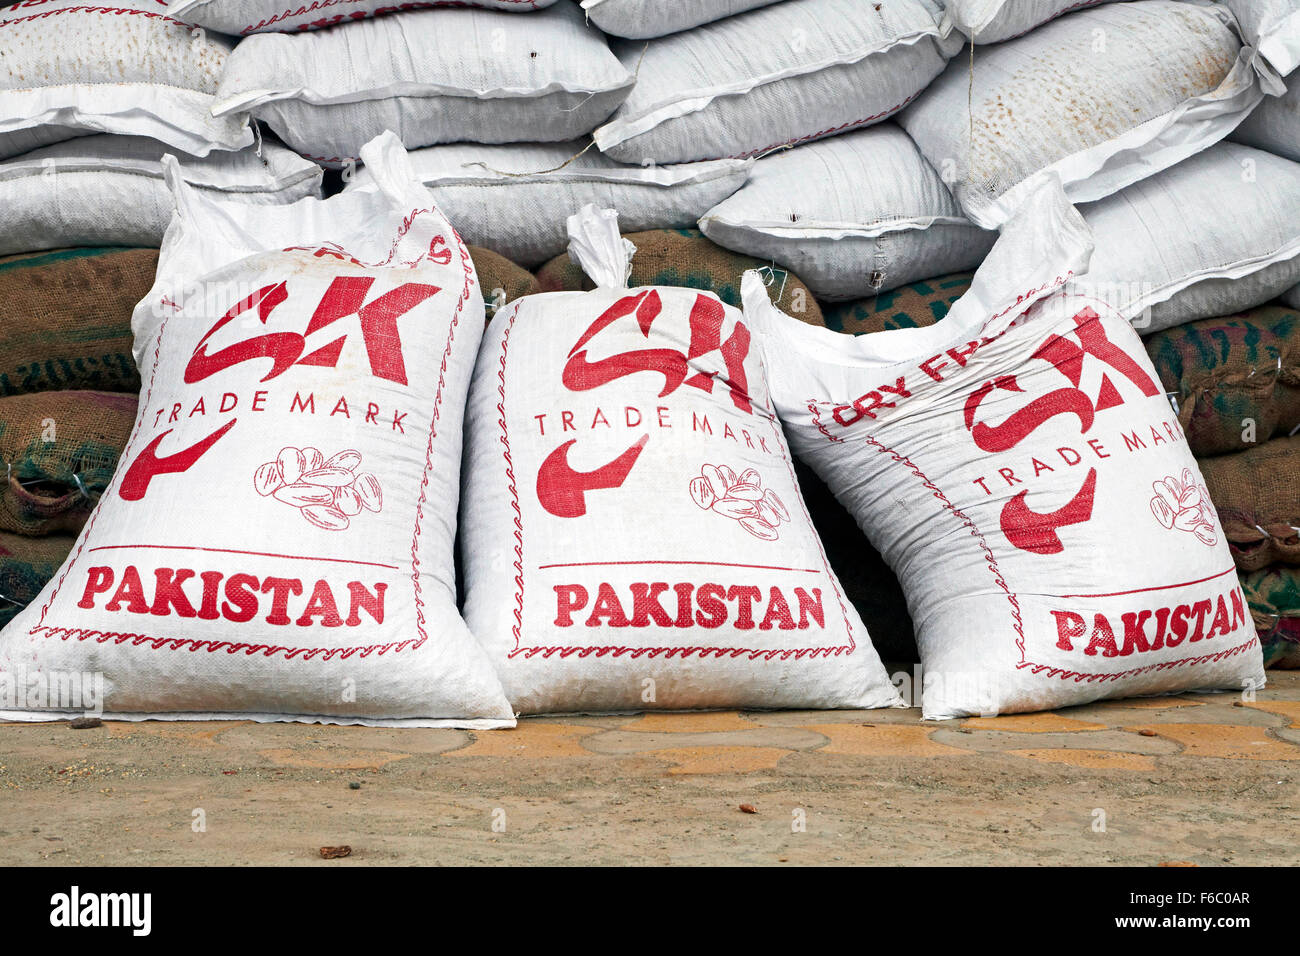 Llegaron mercancías de Pakistán, uri, jammu y cachemira, india, asia Foto de stock